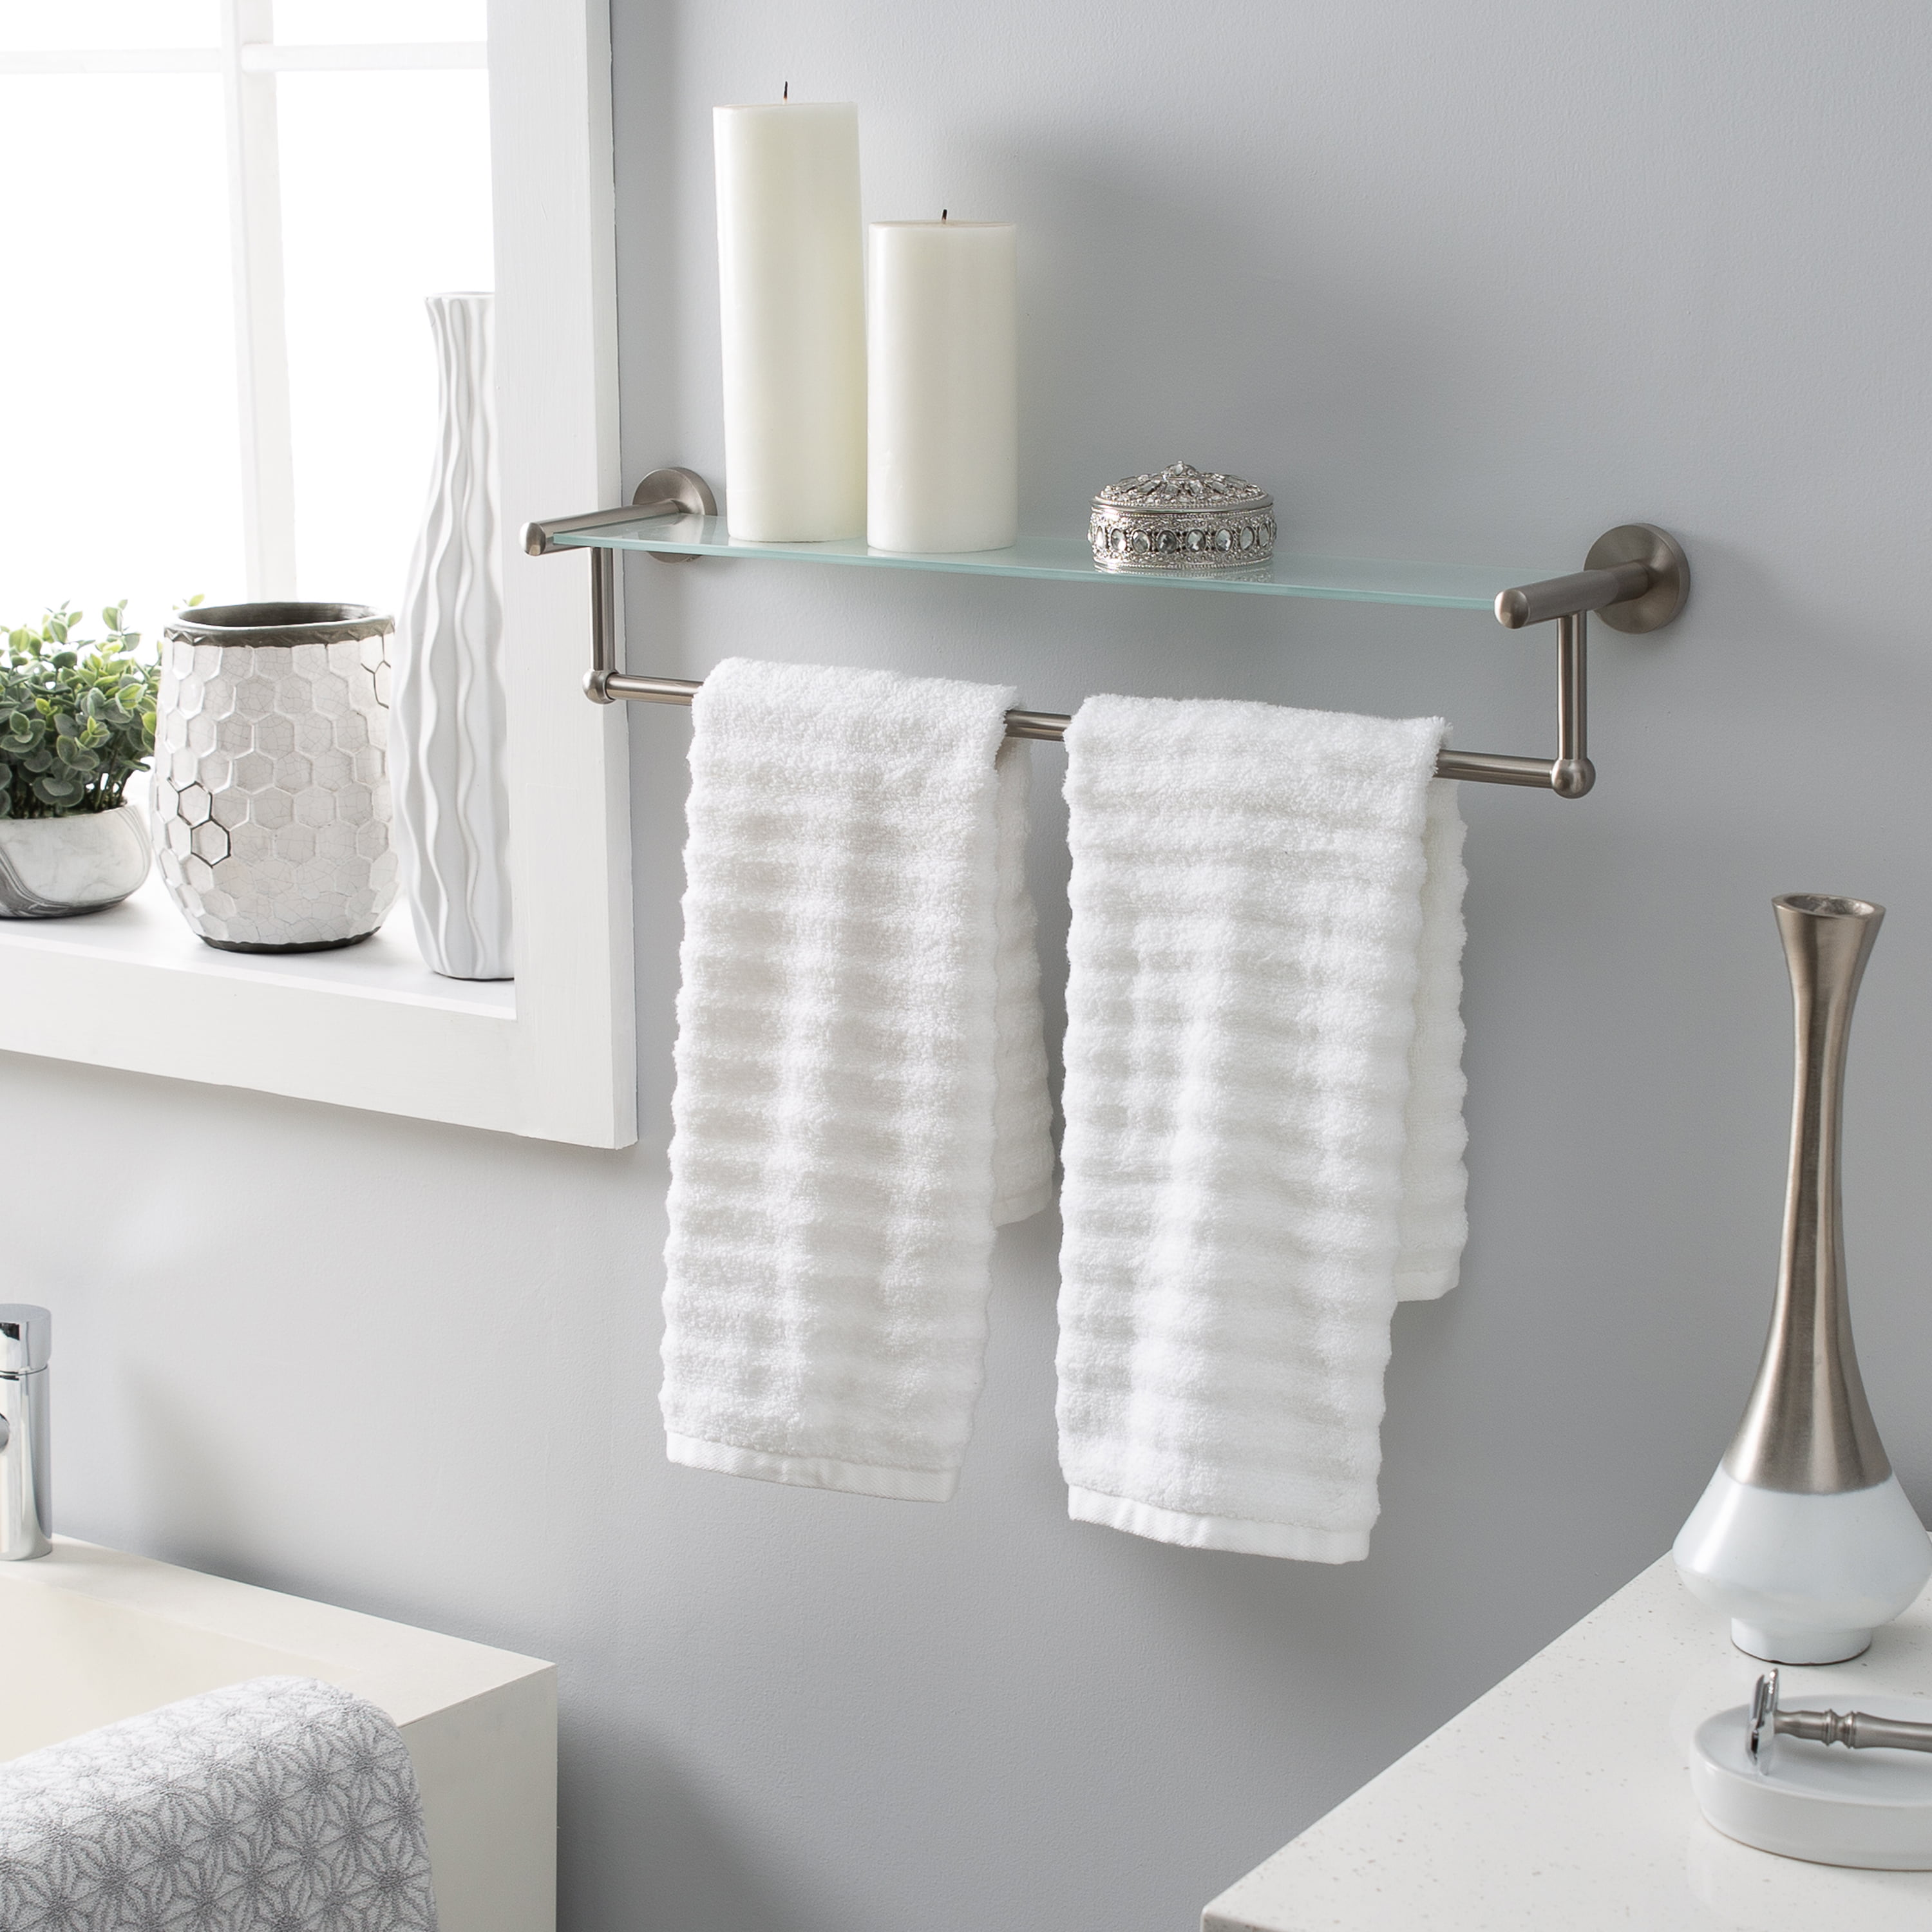 Organize It All Satin Nickel Glass Bathroom Shelf with Towel Bar - image 4 of 8